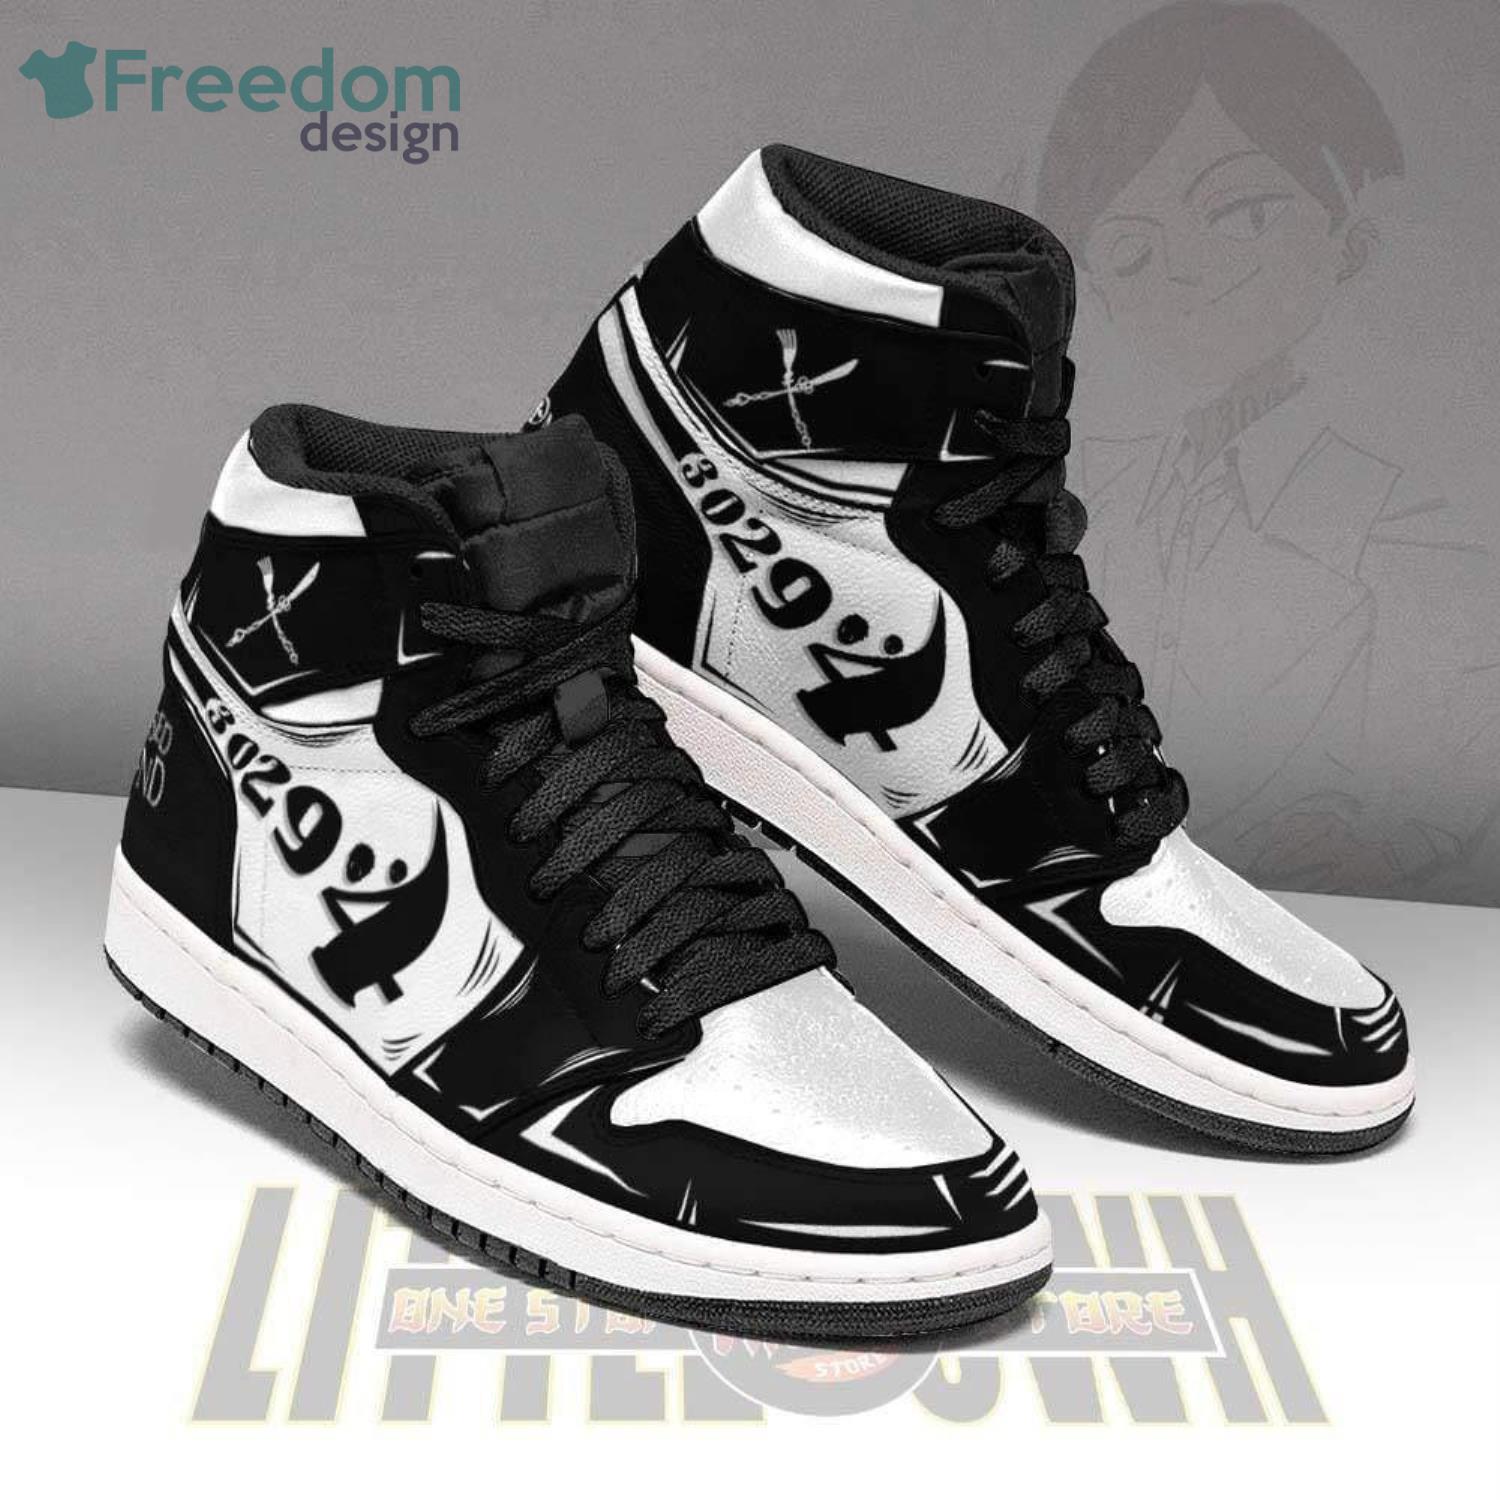 Nat The Promised Neverland Anime Air Jordan Hightop Shoes